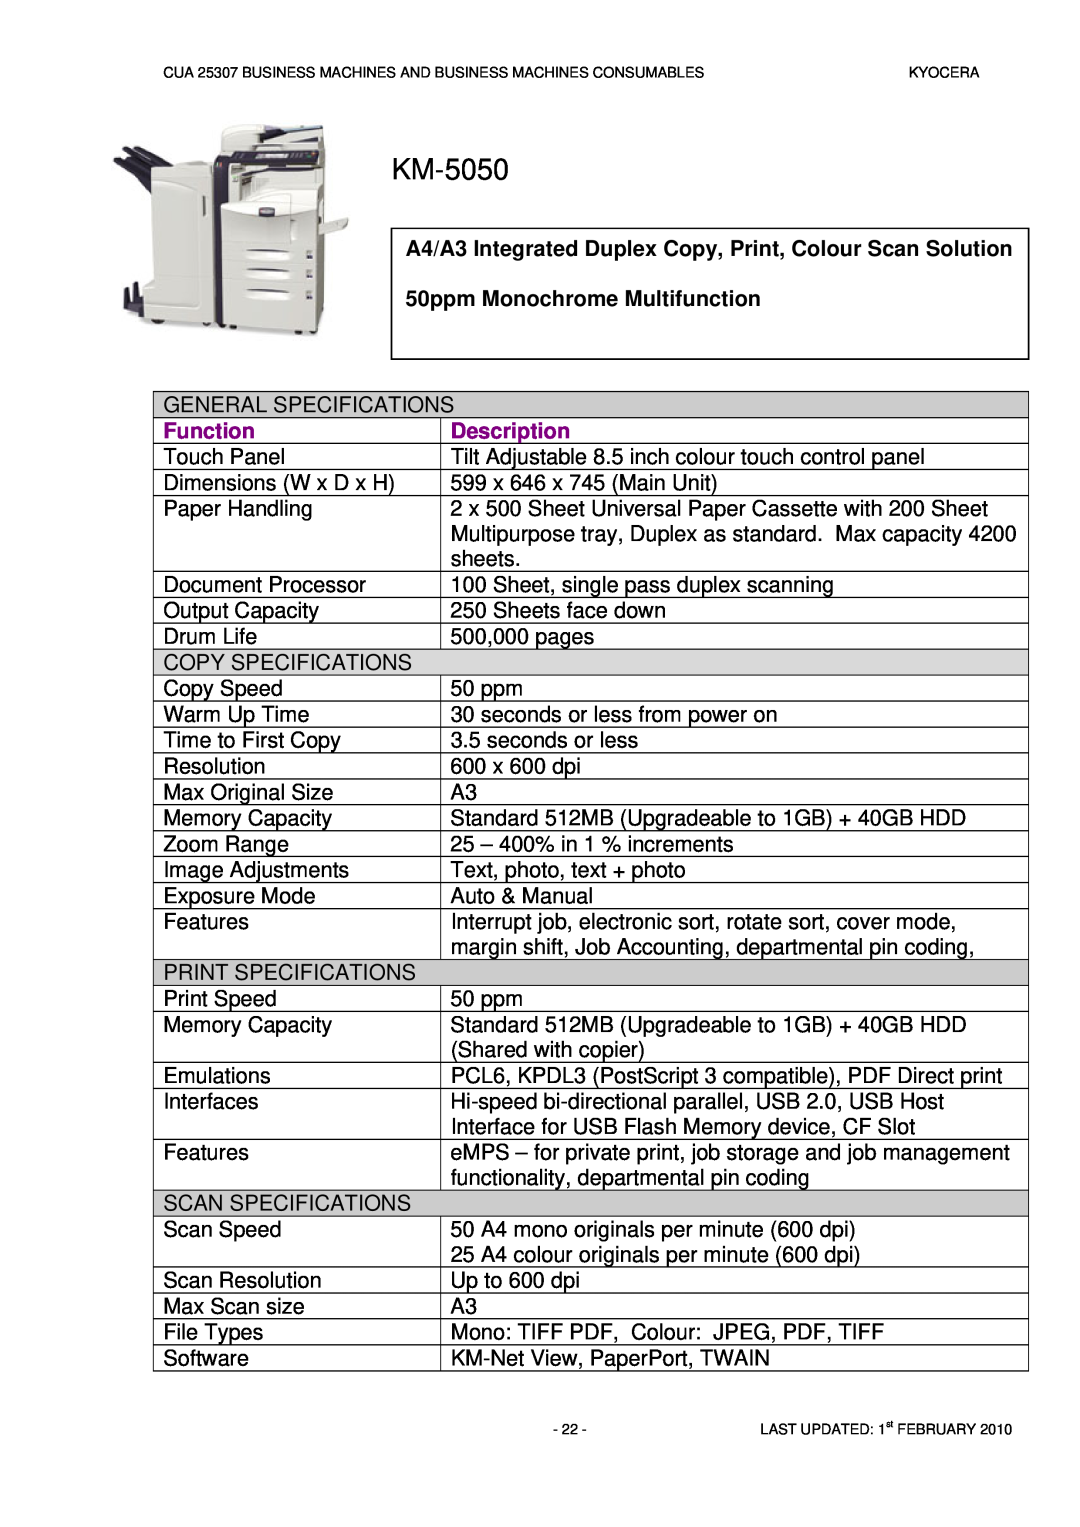 Kyocera CUA 25307 manual KM-5050, 50ppm Monochrome Multifunction, Function, Description 